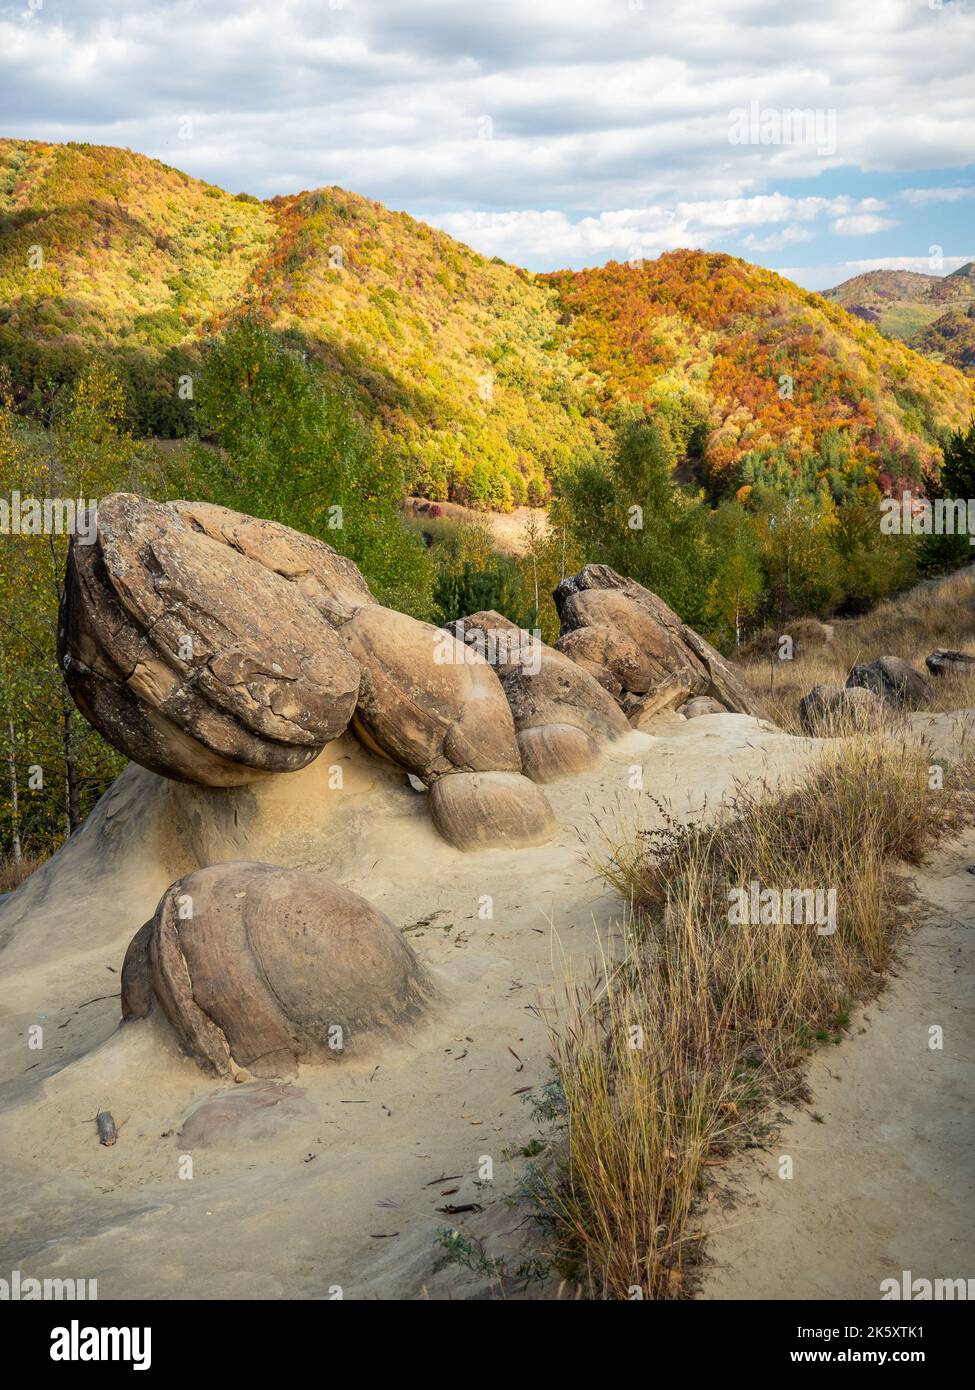 geological sedimentary rocks known as trovanti or the living stones in romanian, Buzau County (Babele de la Ulmet), Romania Stock Photo